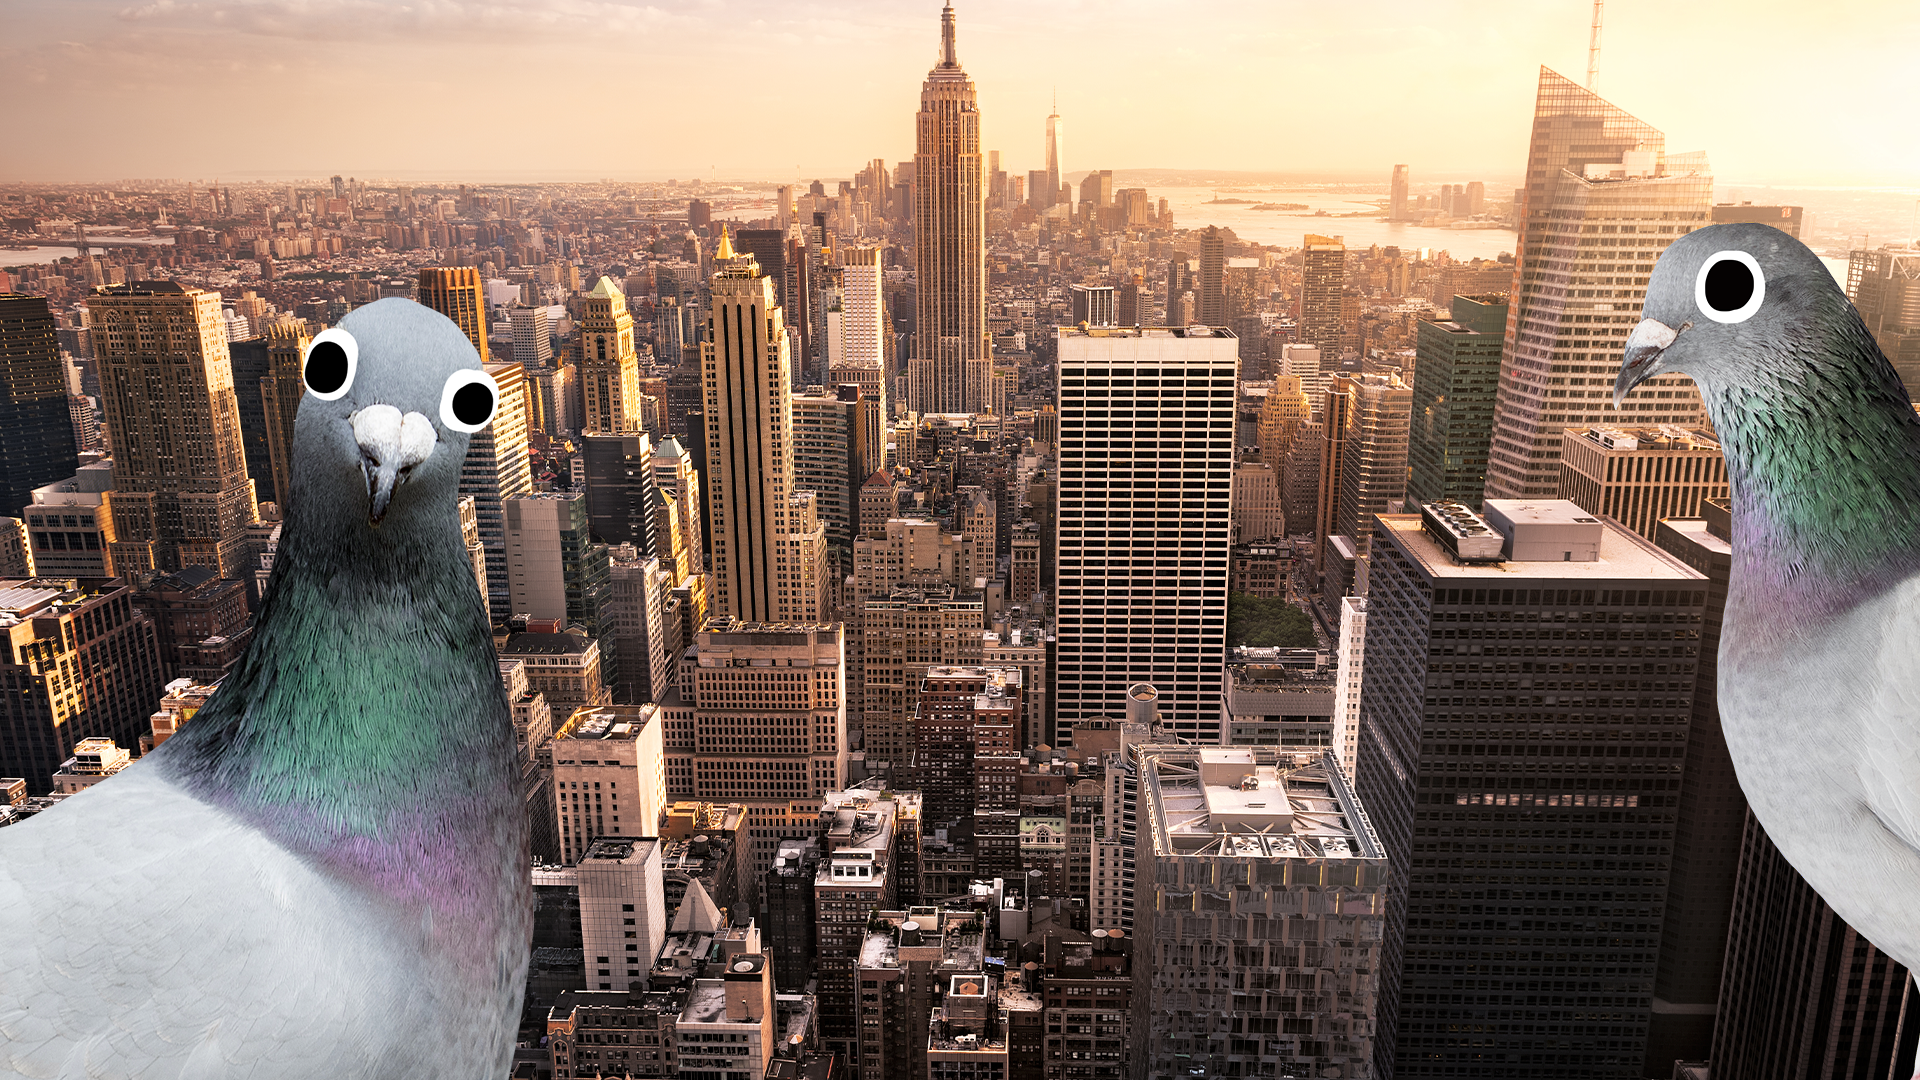 New York City with Beano pigeons